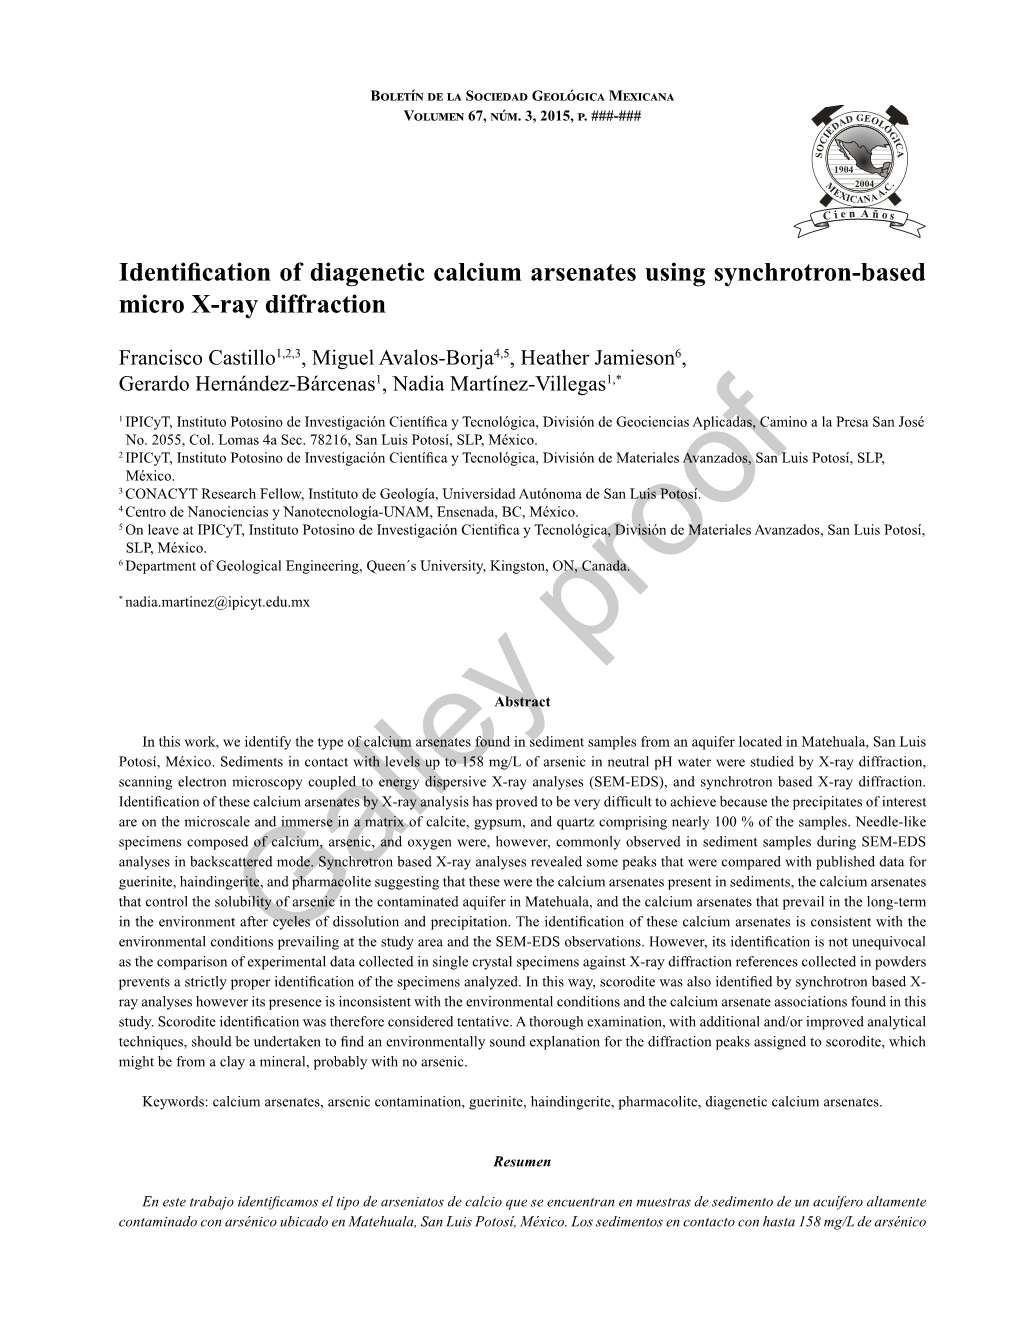 Identification of Diagenetic Calcium Arsenates Using Synchrotron-Based Micro X-Ray Diffraction